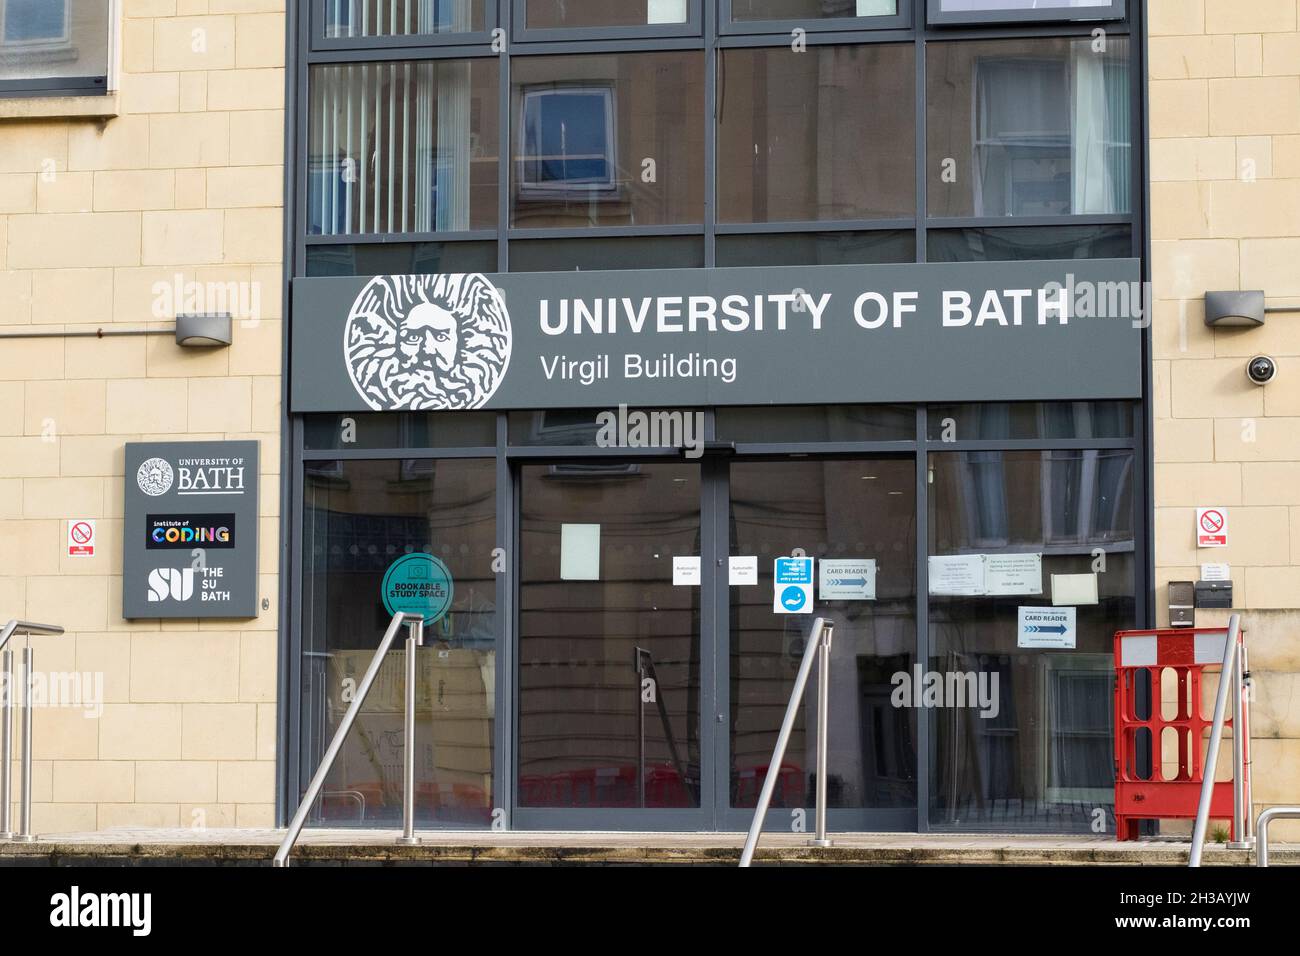 Entrance to the University of Bath Virgil Building, Bath, UK Stock Photo